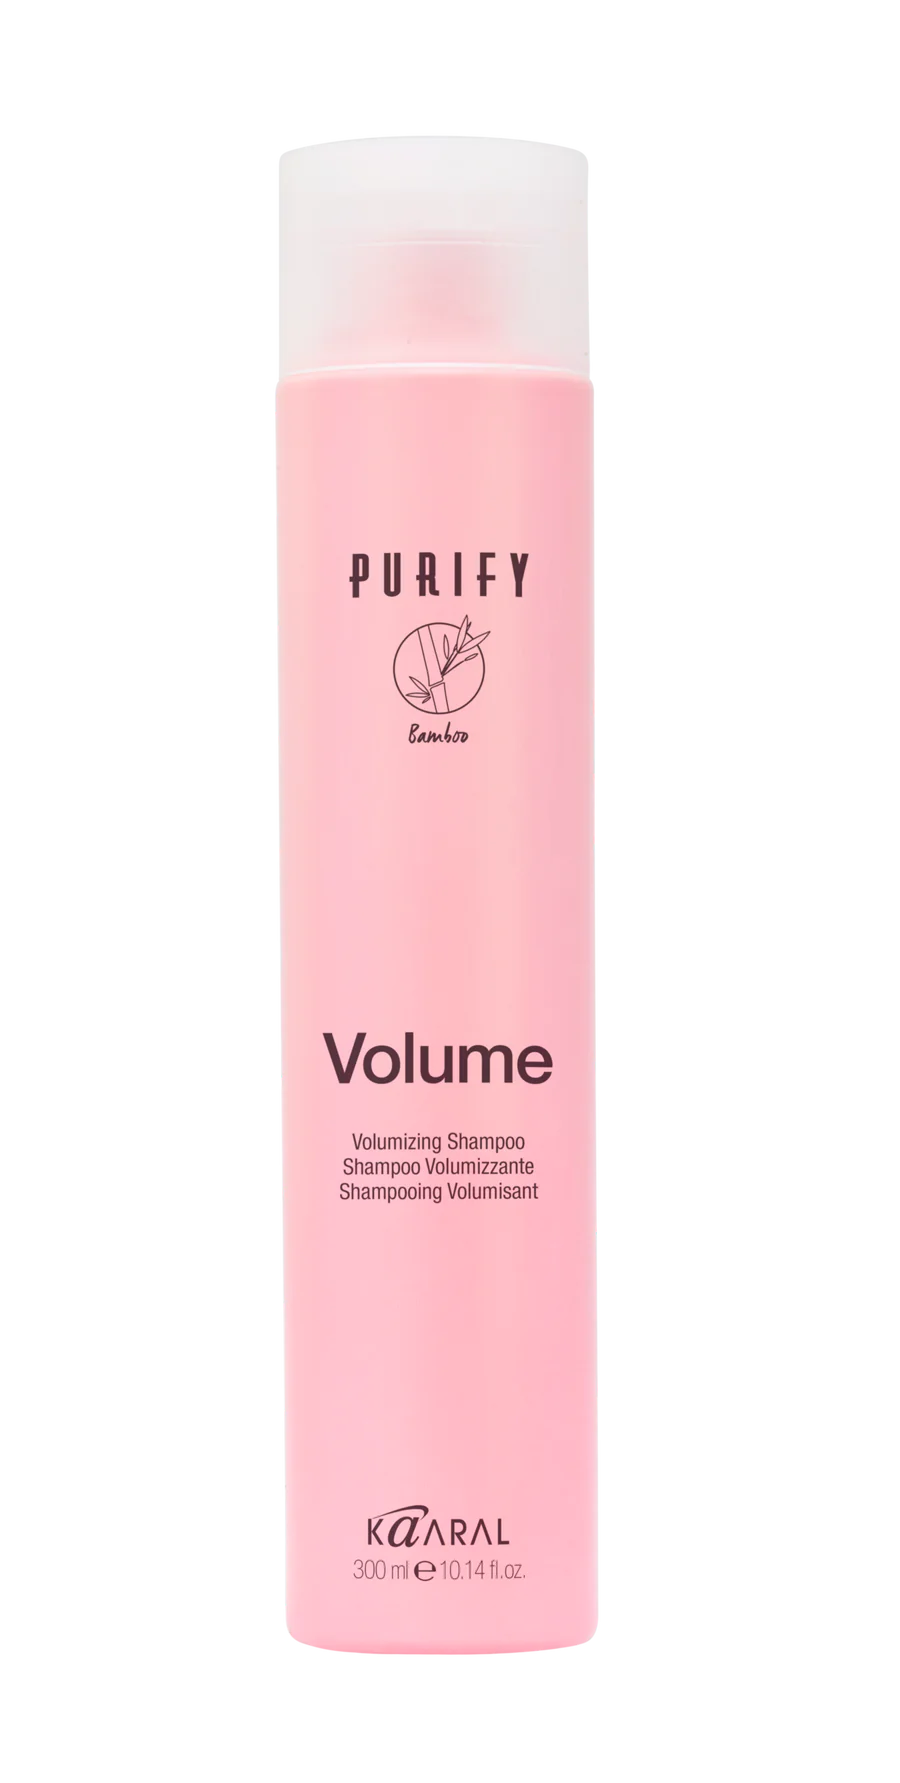 Kaaral Purify Volume Shampoo - 300ml